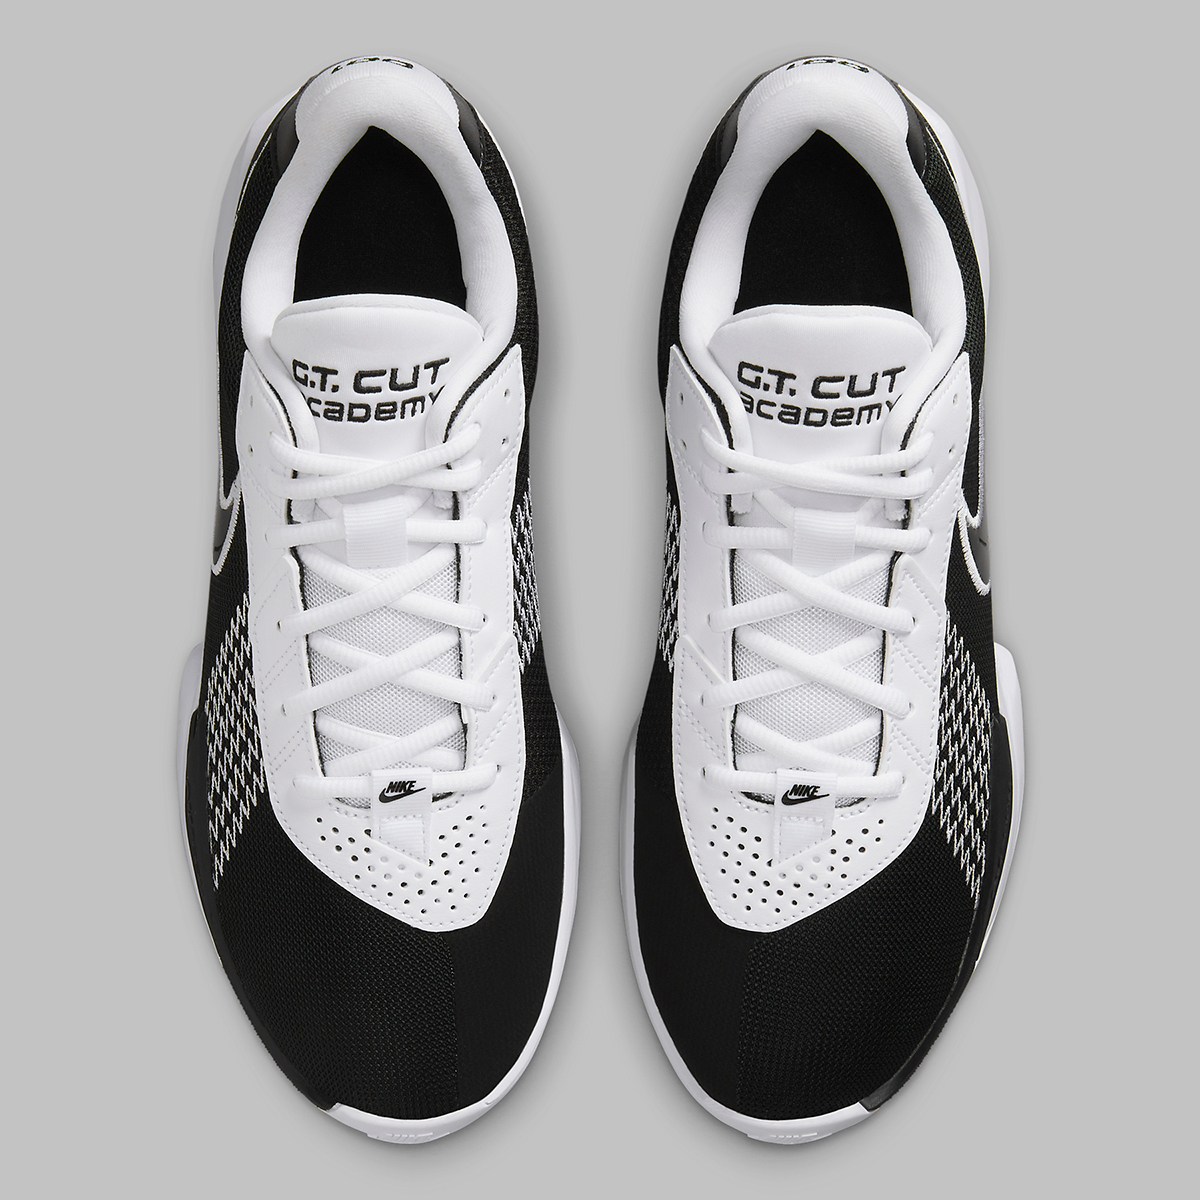 Nike Zoom Gt Cut Academy Black White Fb2599 003 3 Ba771f